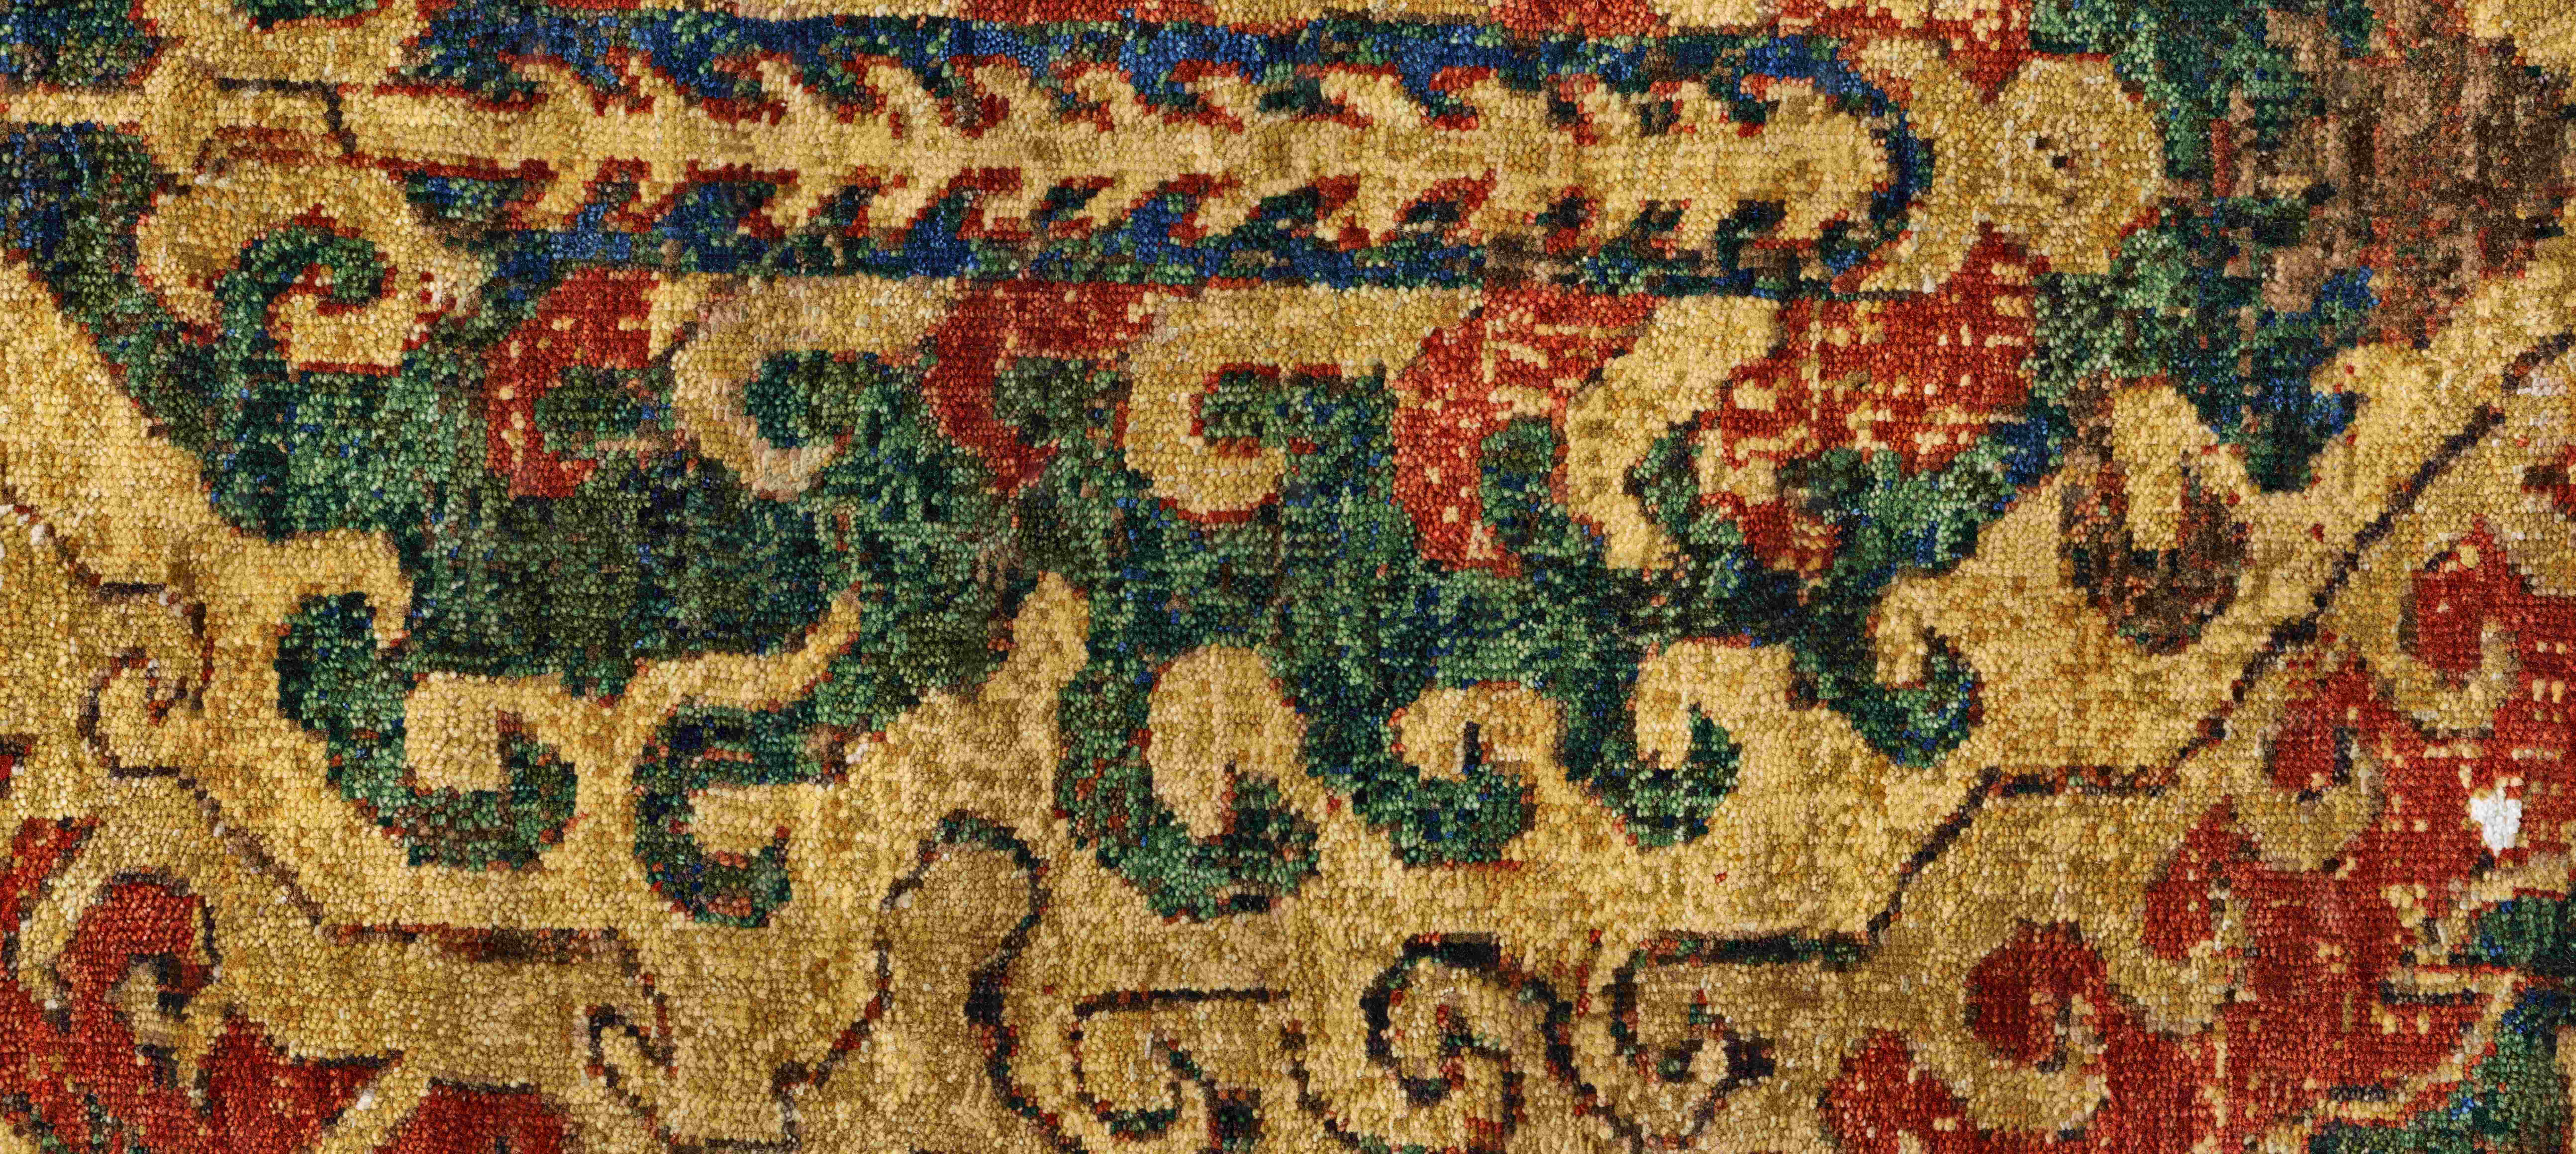 CulturalxCollabs: Fragment No. 12 © Museum für Islamische Kunst, Heiner Büld